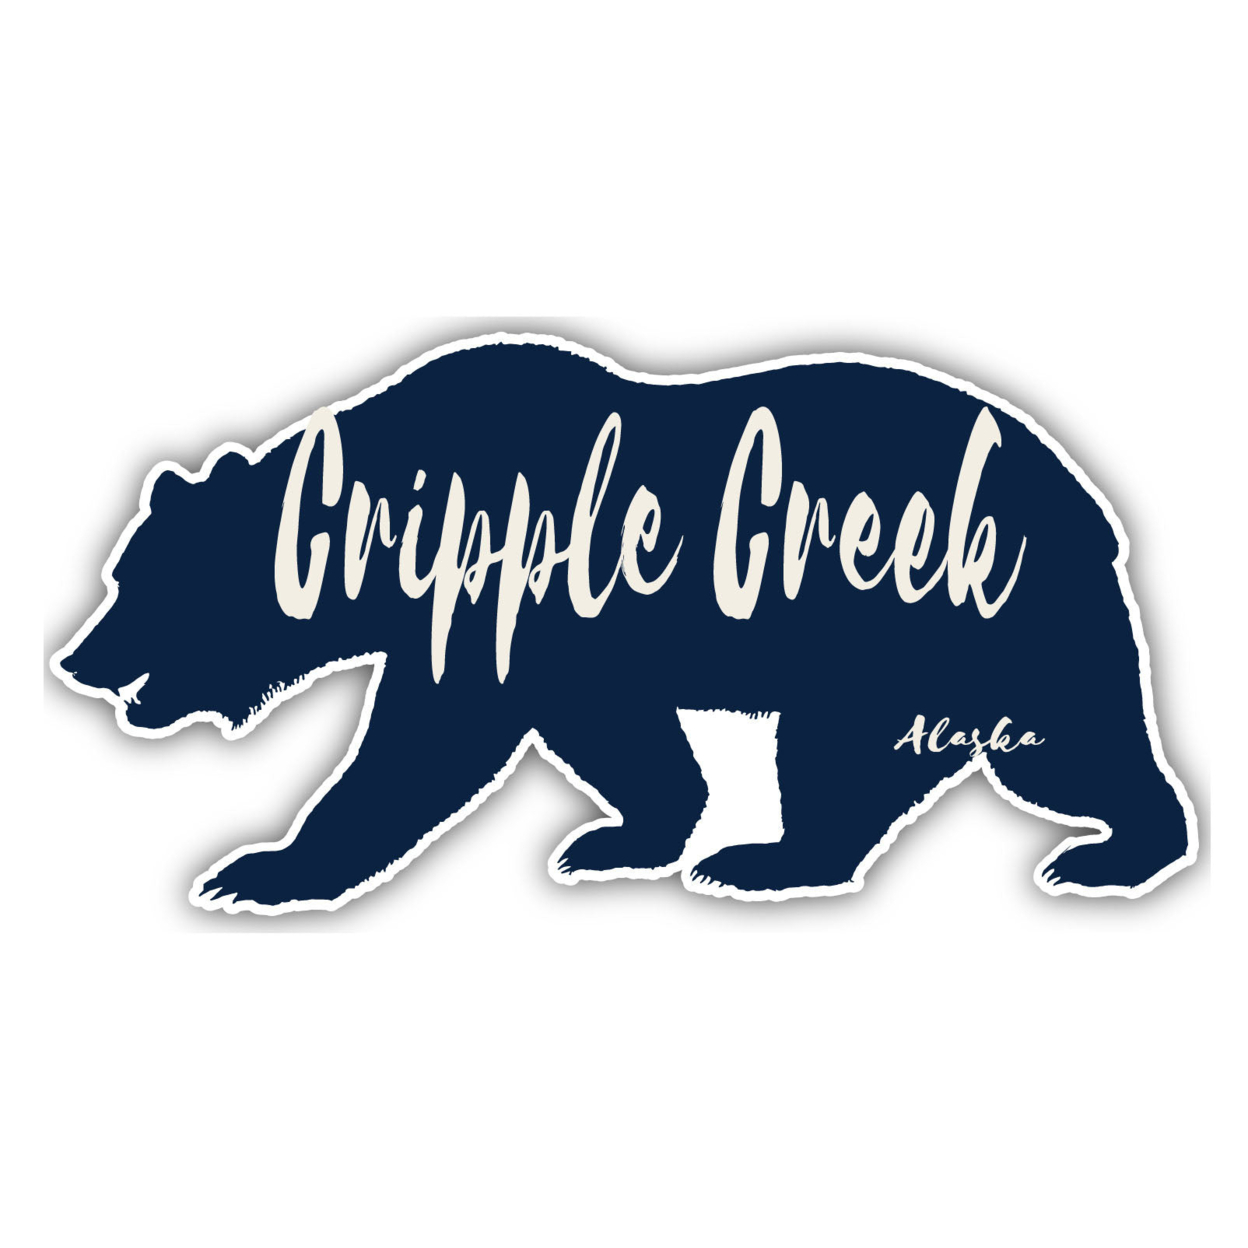 Cripple Creek Alaska Souvenir Decorative Stickers (Choose Theme And Size) - Single Unit, 10-Inch, Bear